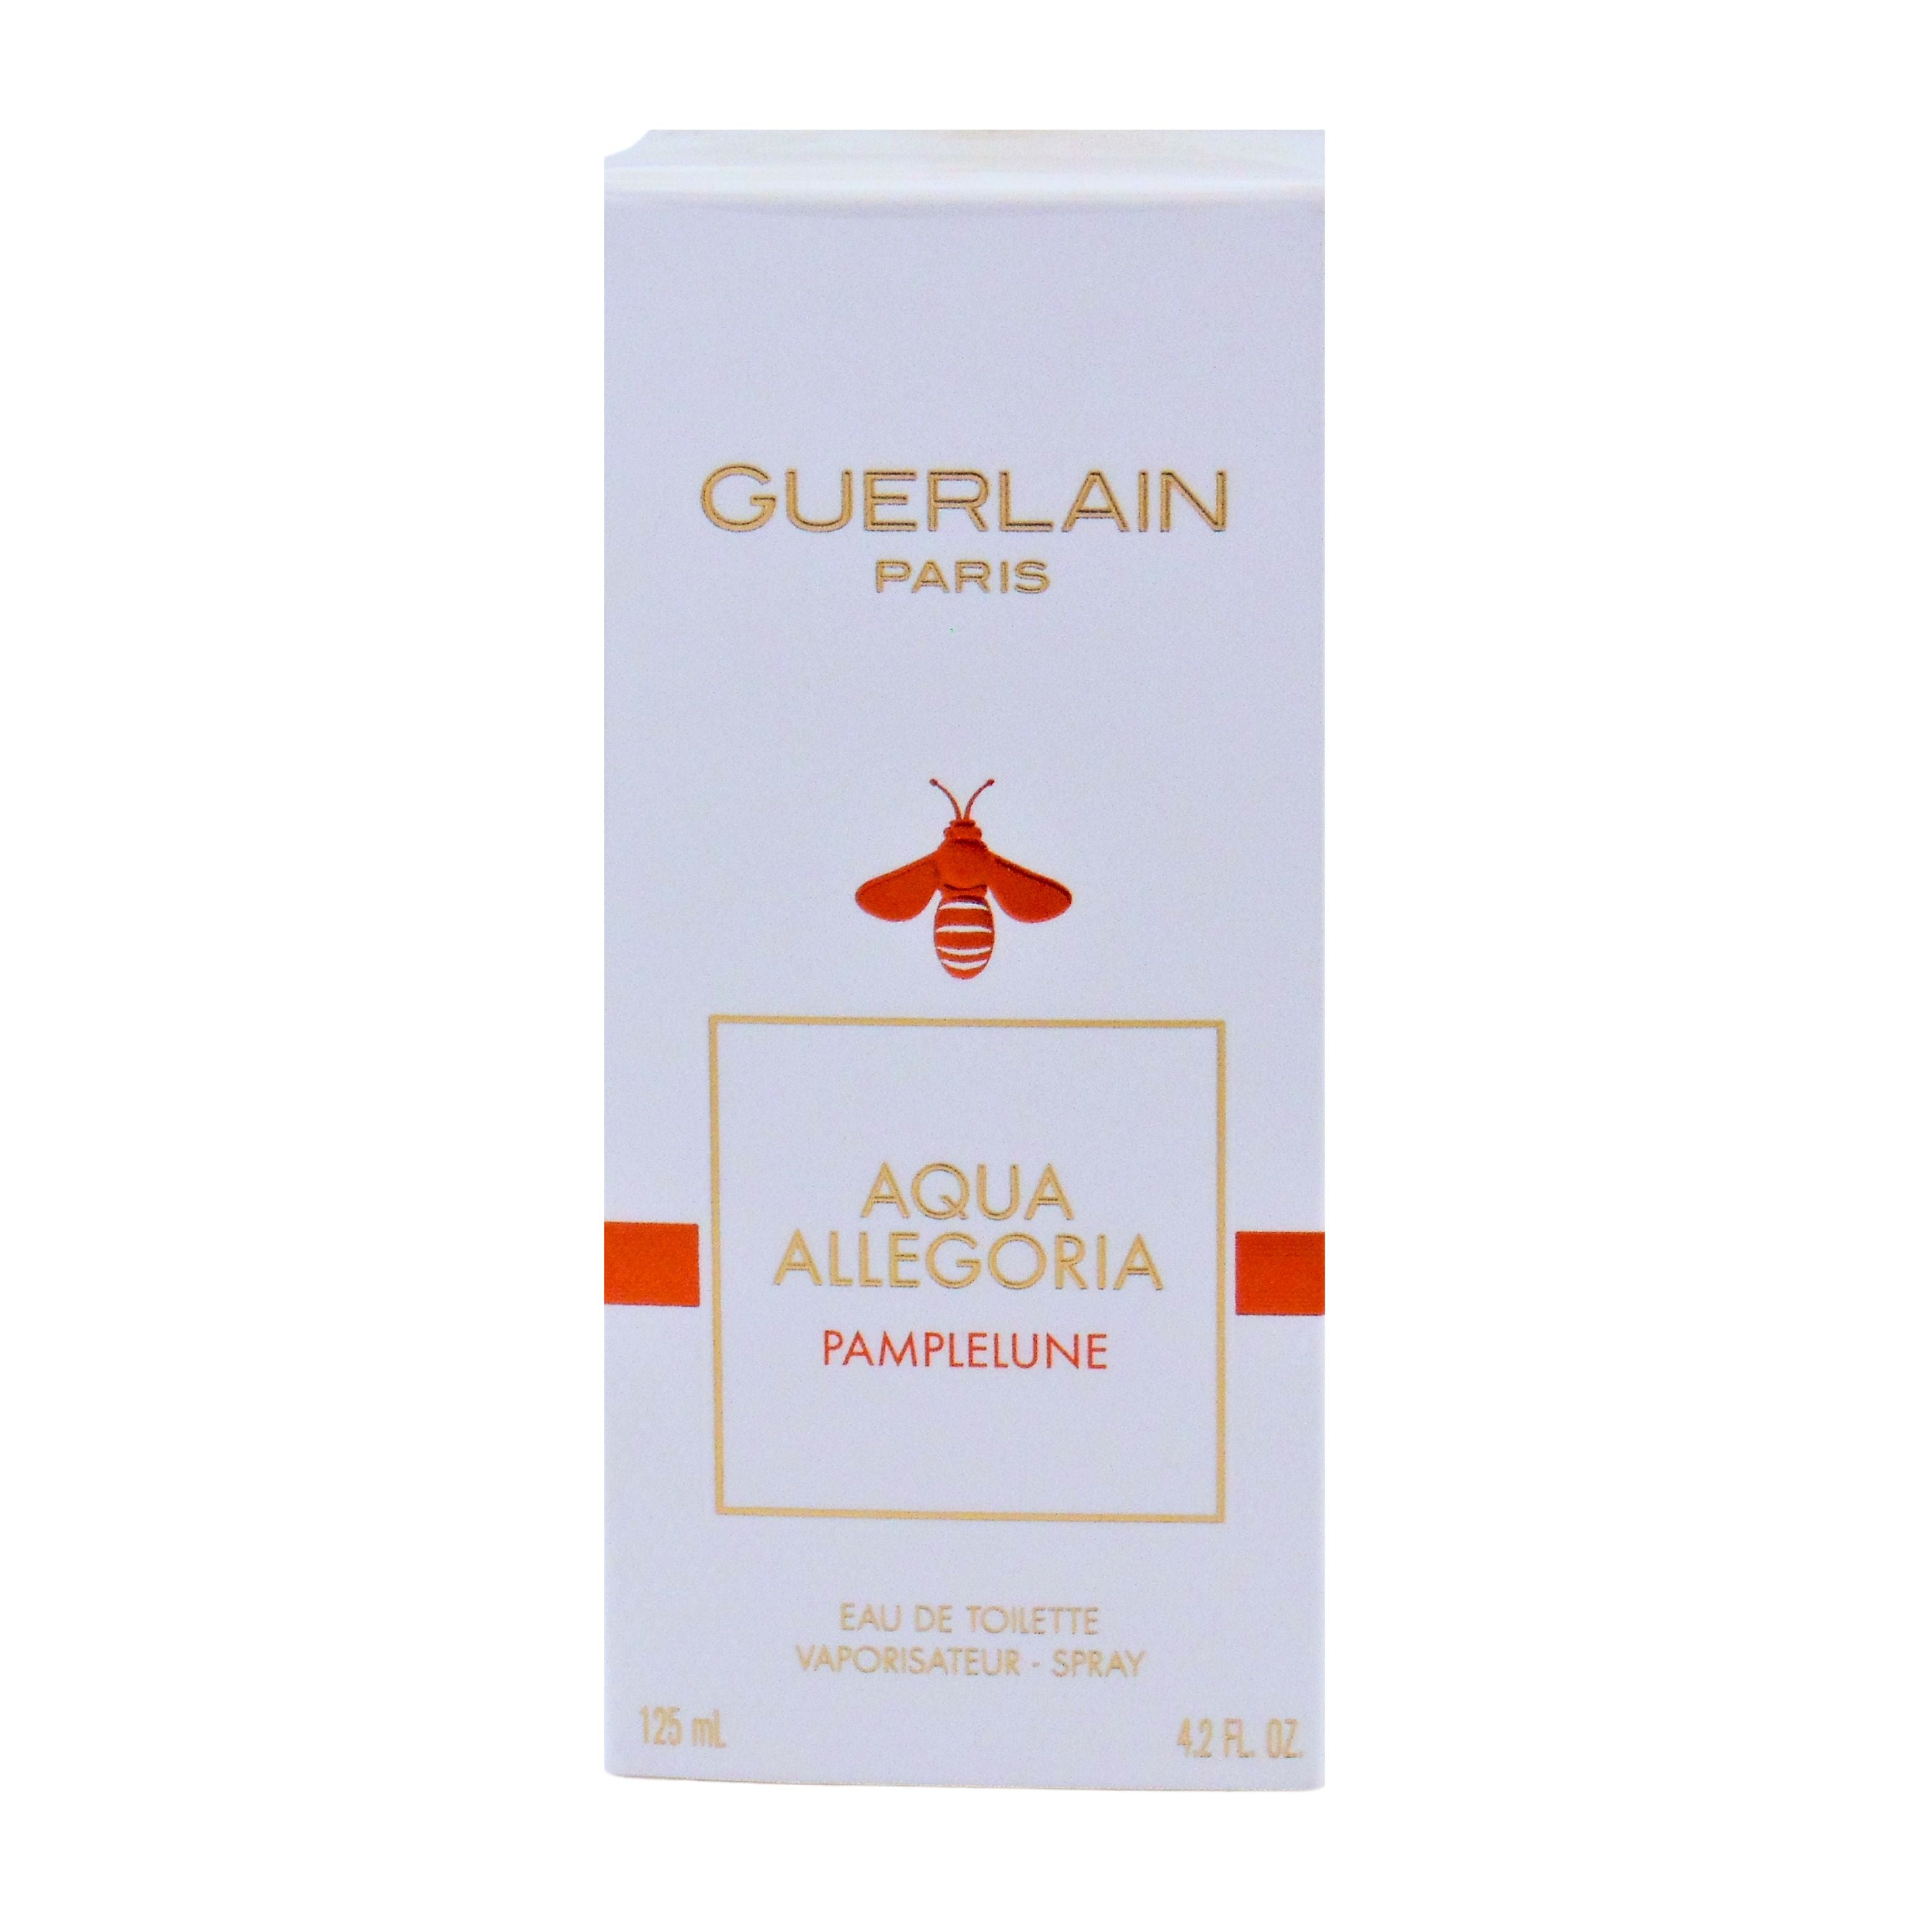 Guerlain Aqua Allegoria Pamplelun Eau de Toilette for Women